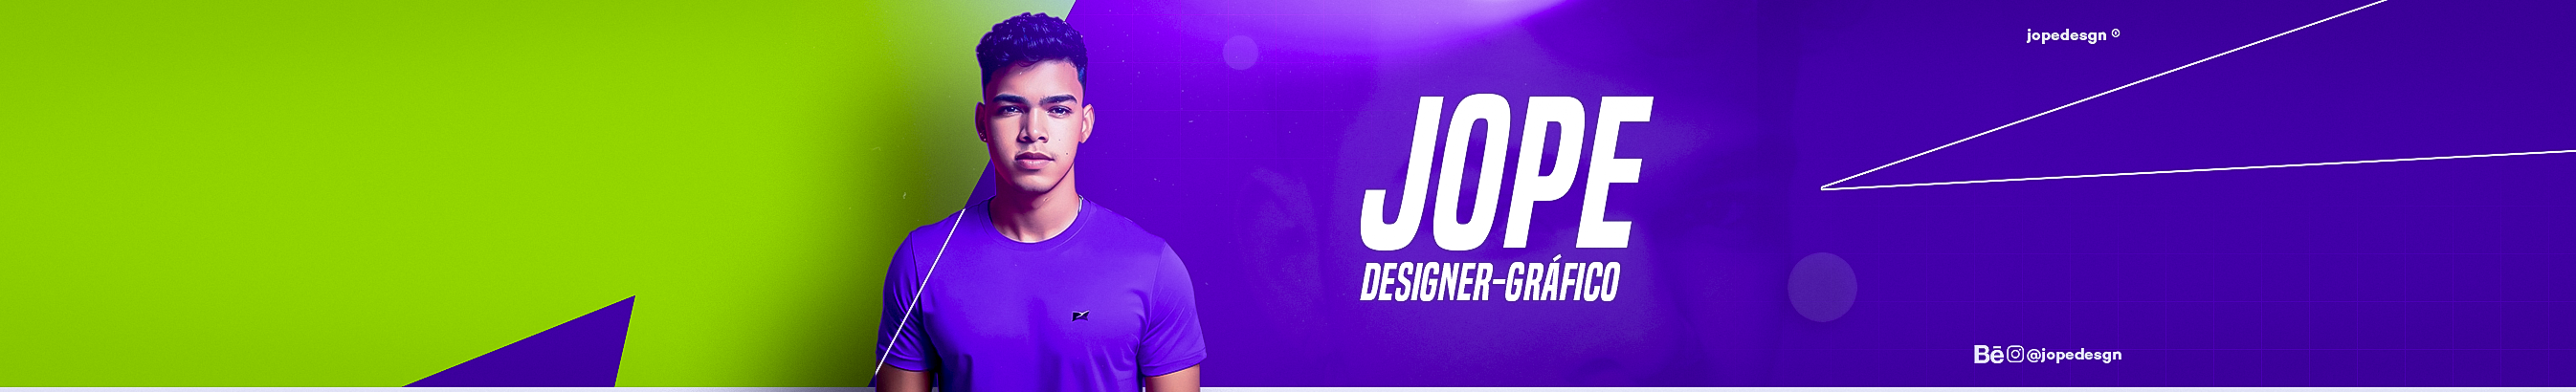 Banner de perfil de Jope Designer